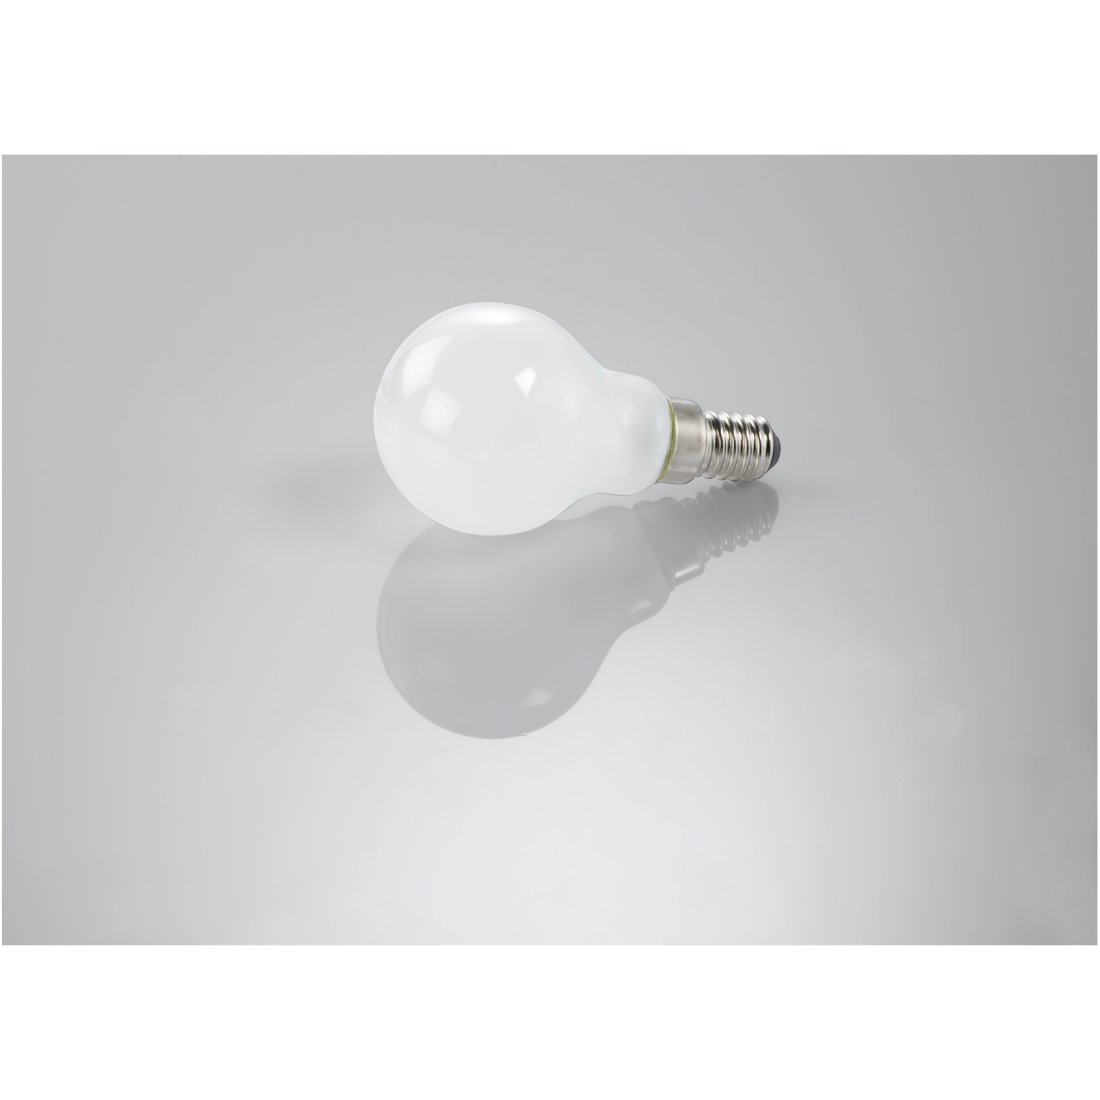 abx3 High-Res Image 3 - Xavax, Ampoule filament LED, E14, 470lm rempl. 40W, amp. sphr., mate, blc chd